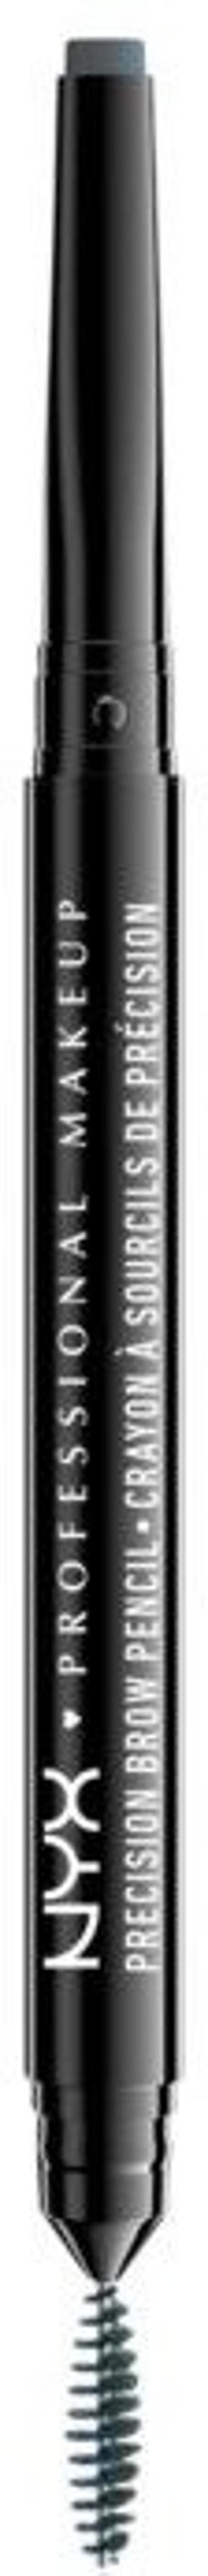 NYX Professional Makeup Precision Brow Pencil - Oboustranná tužka na obočí - Charcoal 0.13 g